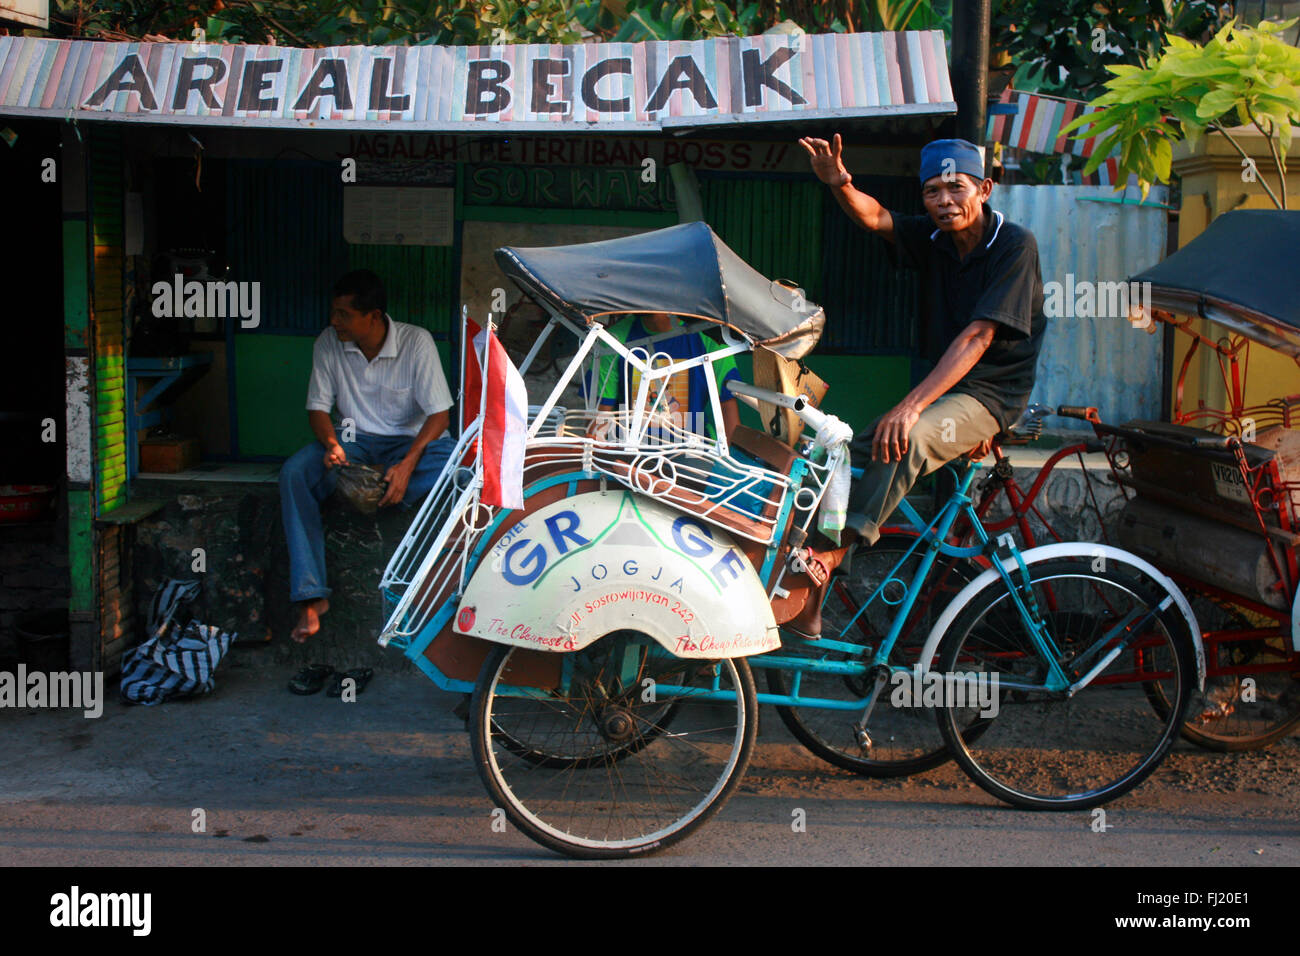 Becak driver in Jakarta, Indonesia Stock Photo